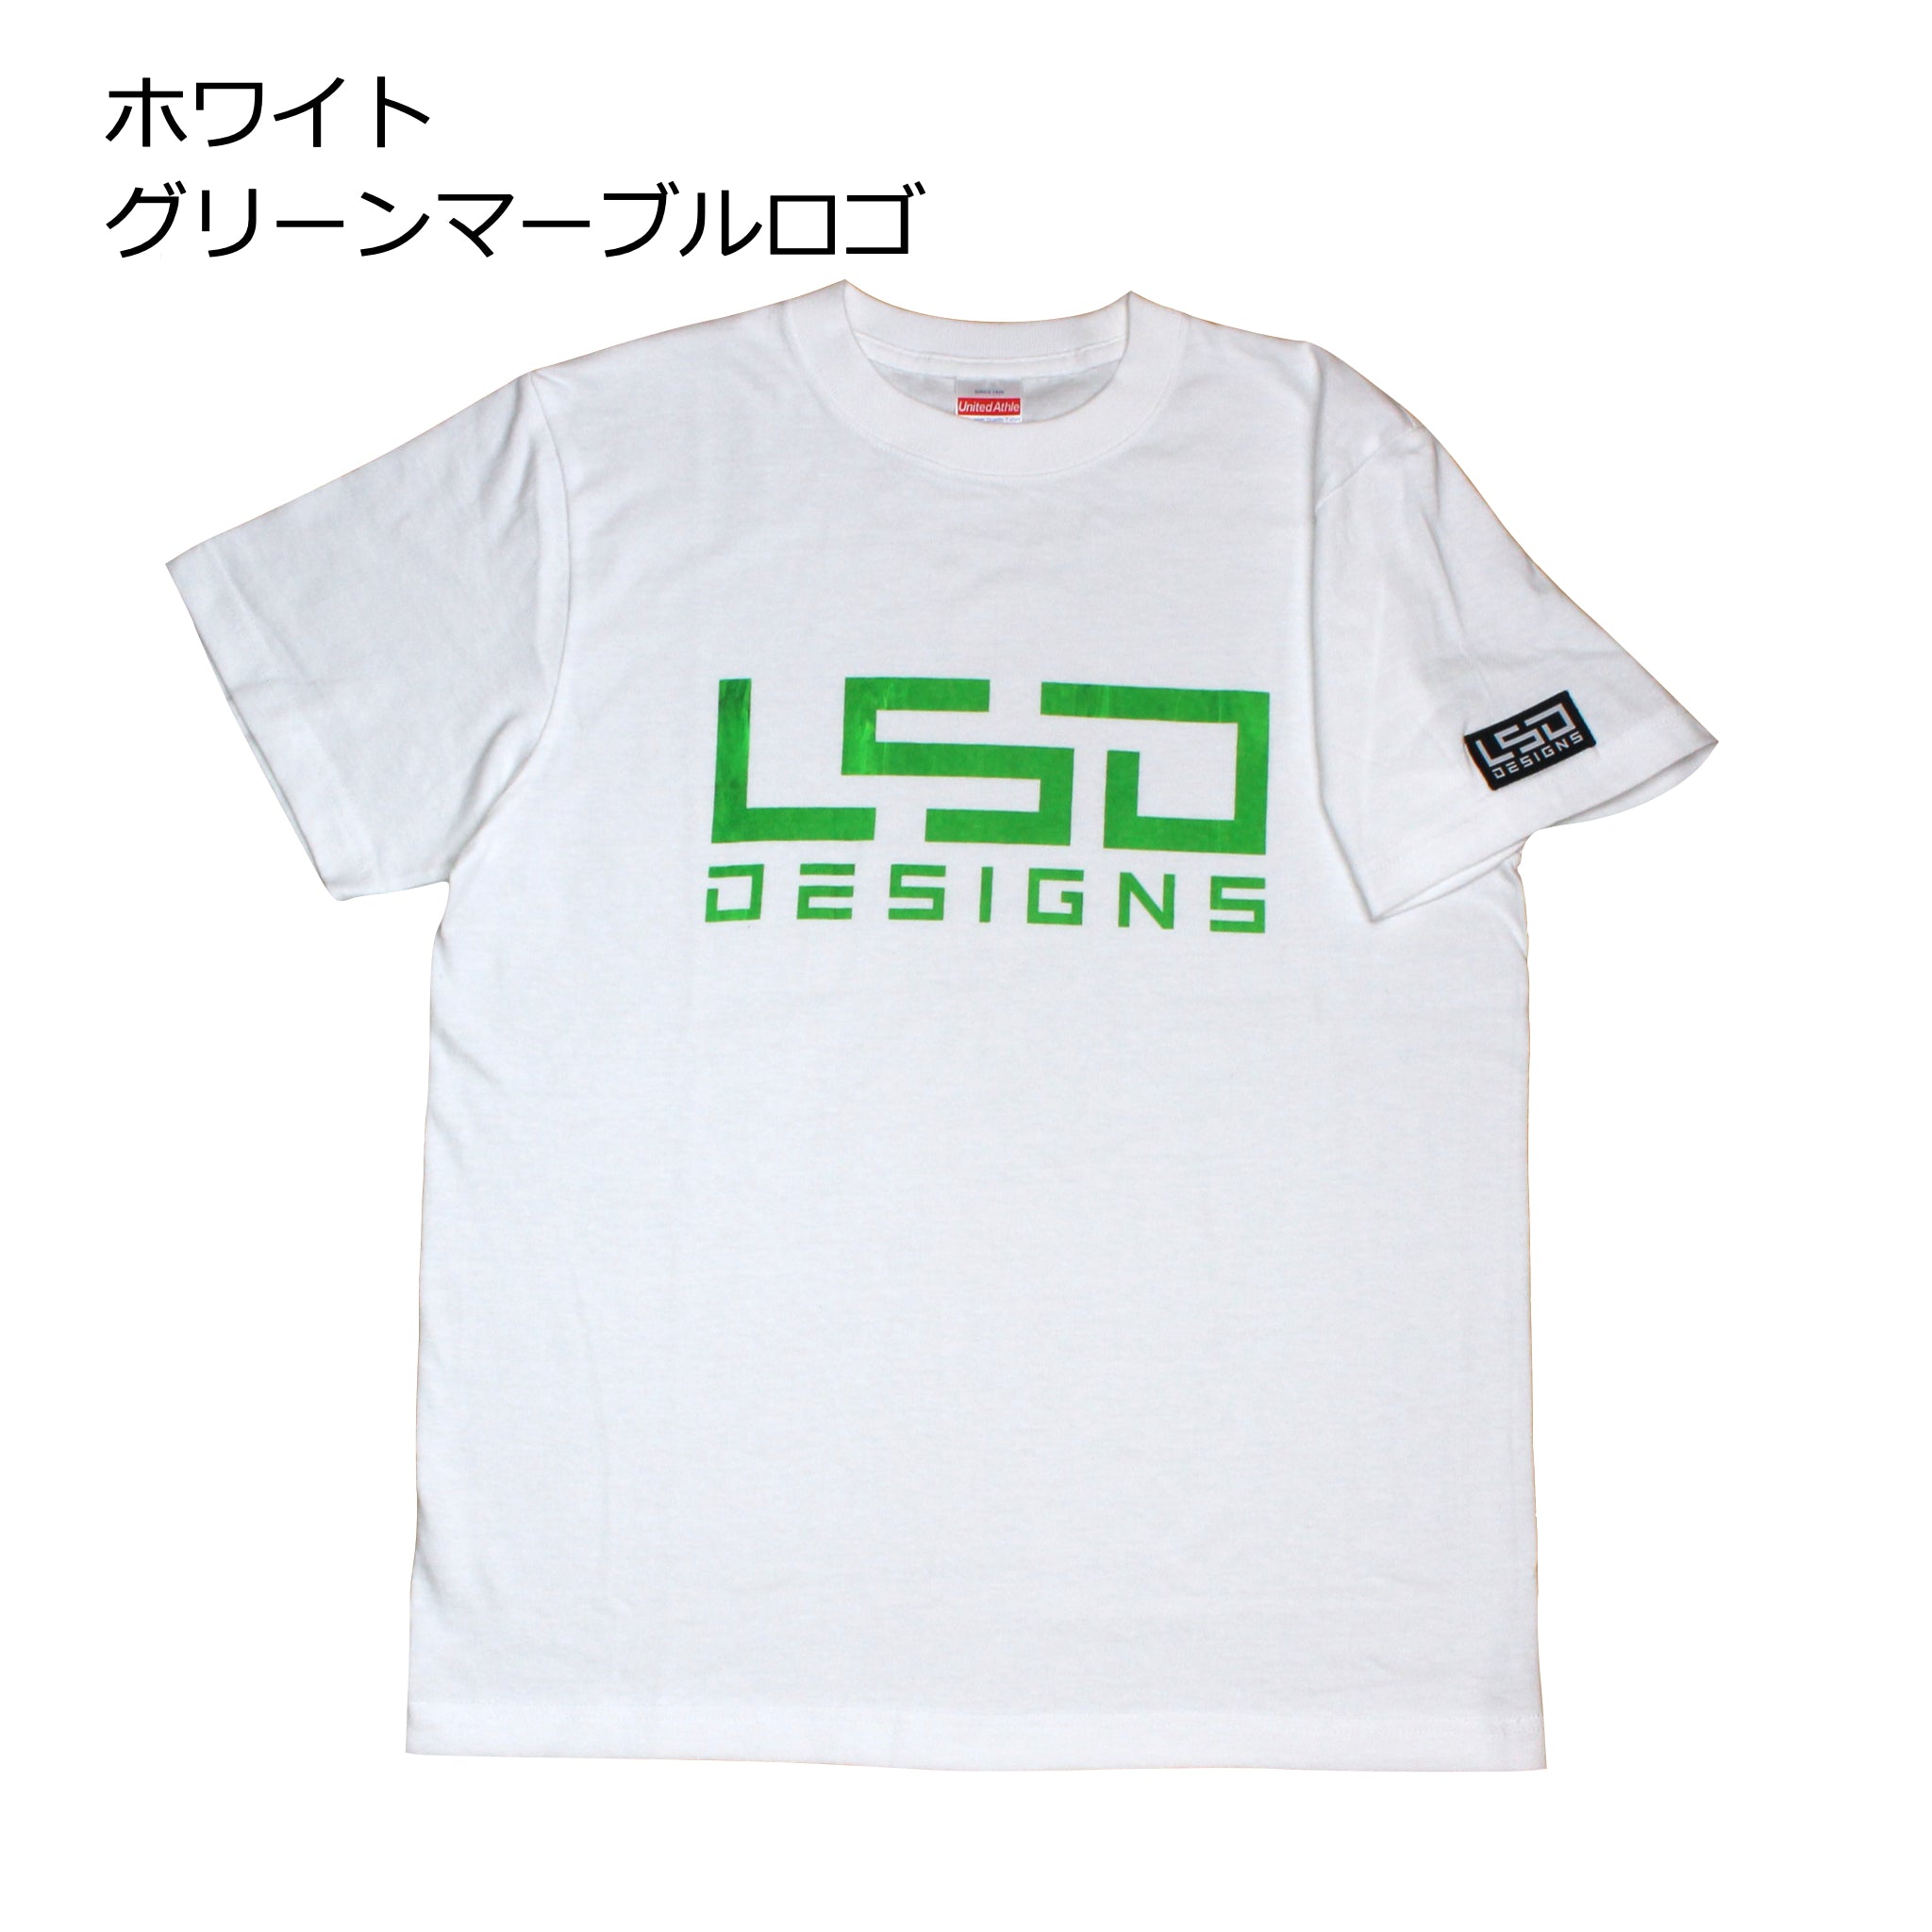 56design Tシャツ\u003cLサイズ\u003e